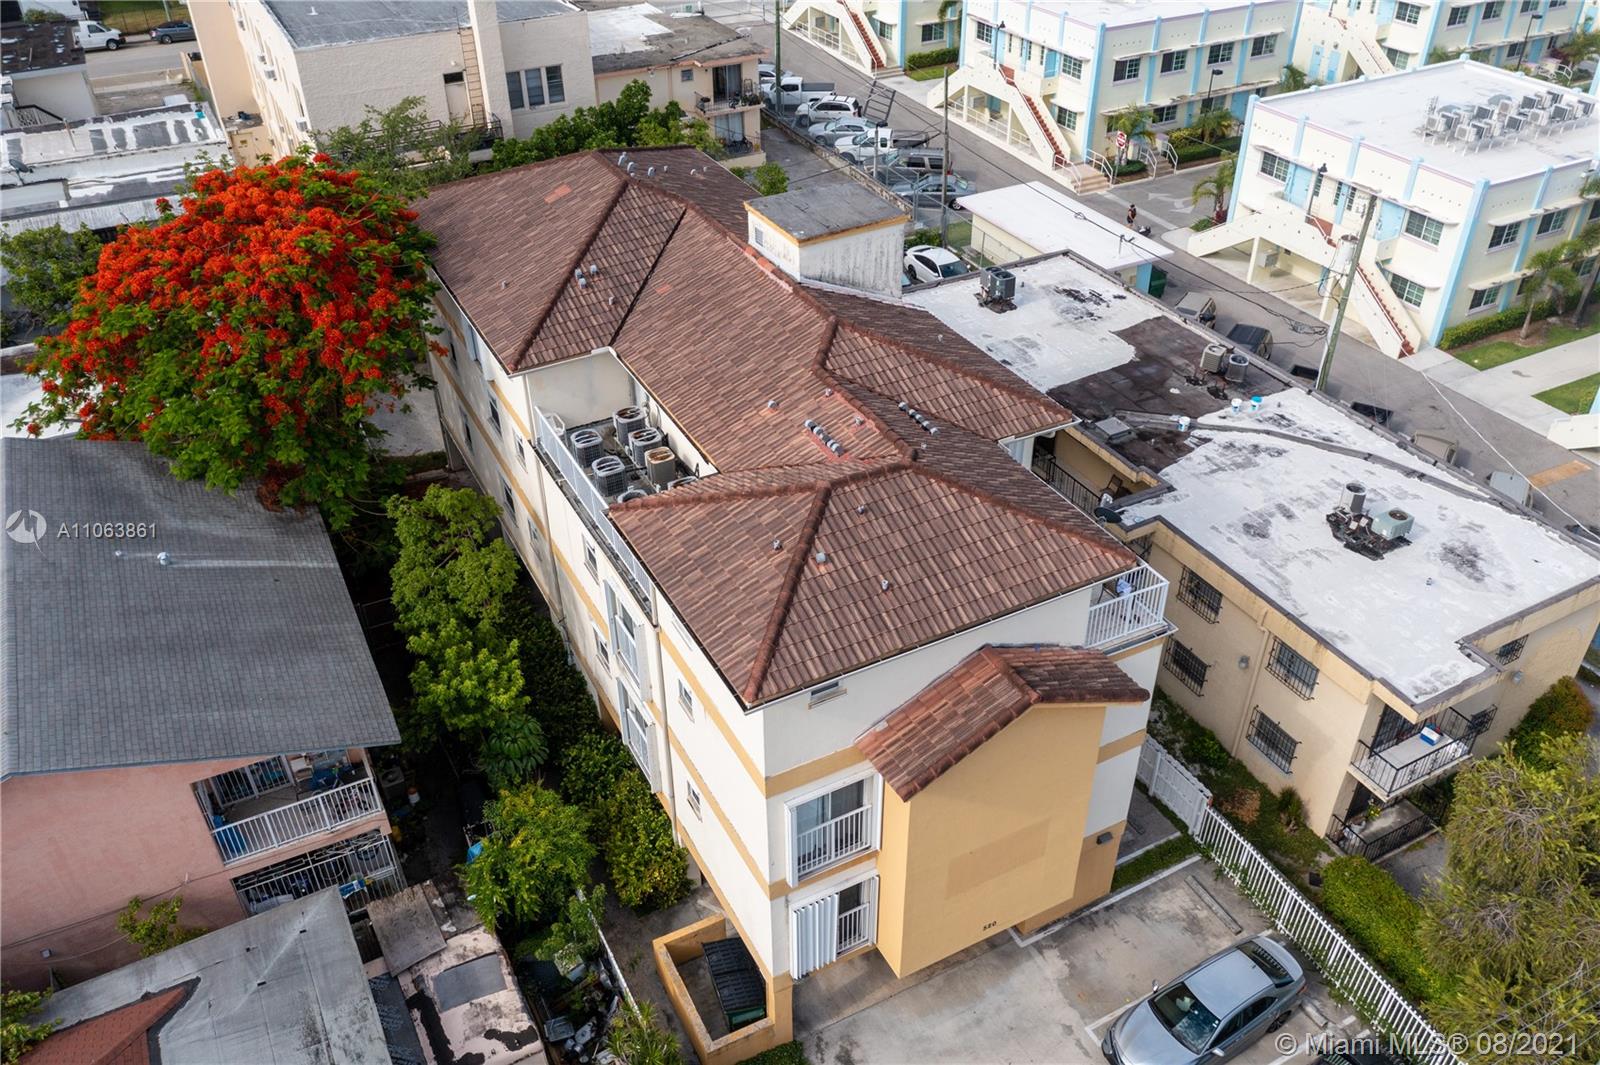 Photo 1 of Parkview Apartments Condo Apt 201 in Miami - MLS A11063861